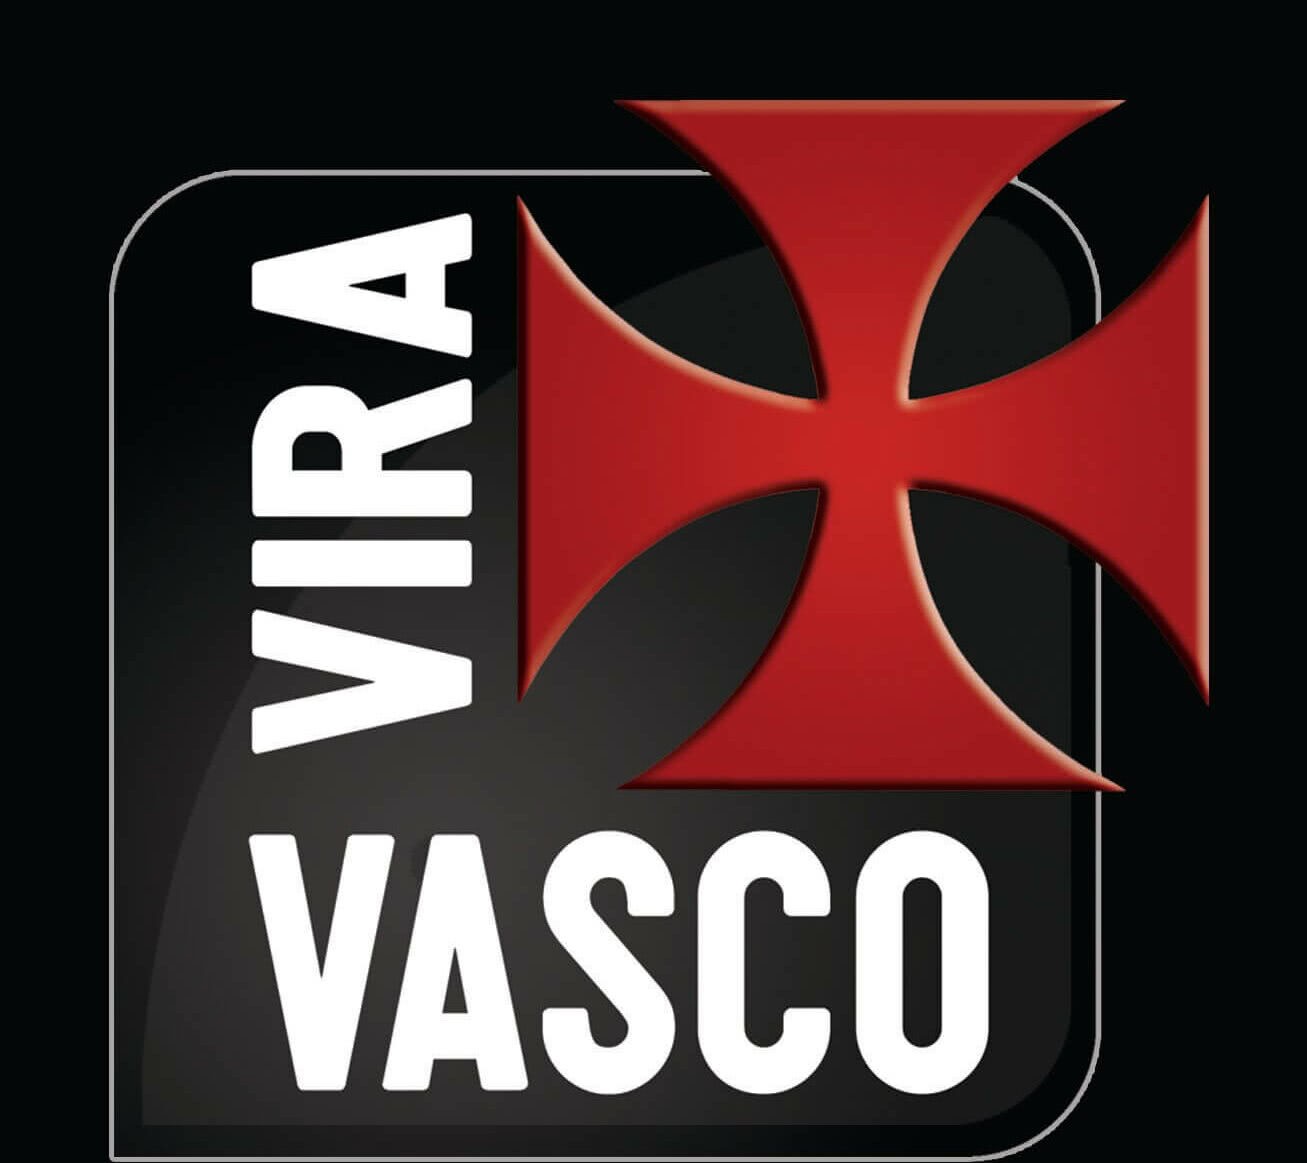 Vira Vasco, grupo político do Vasco